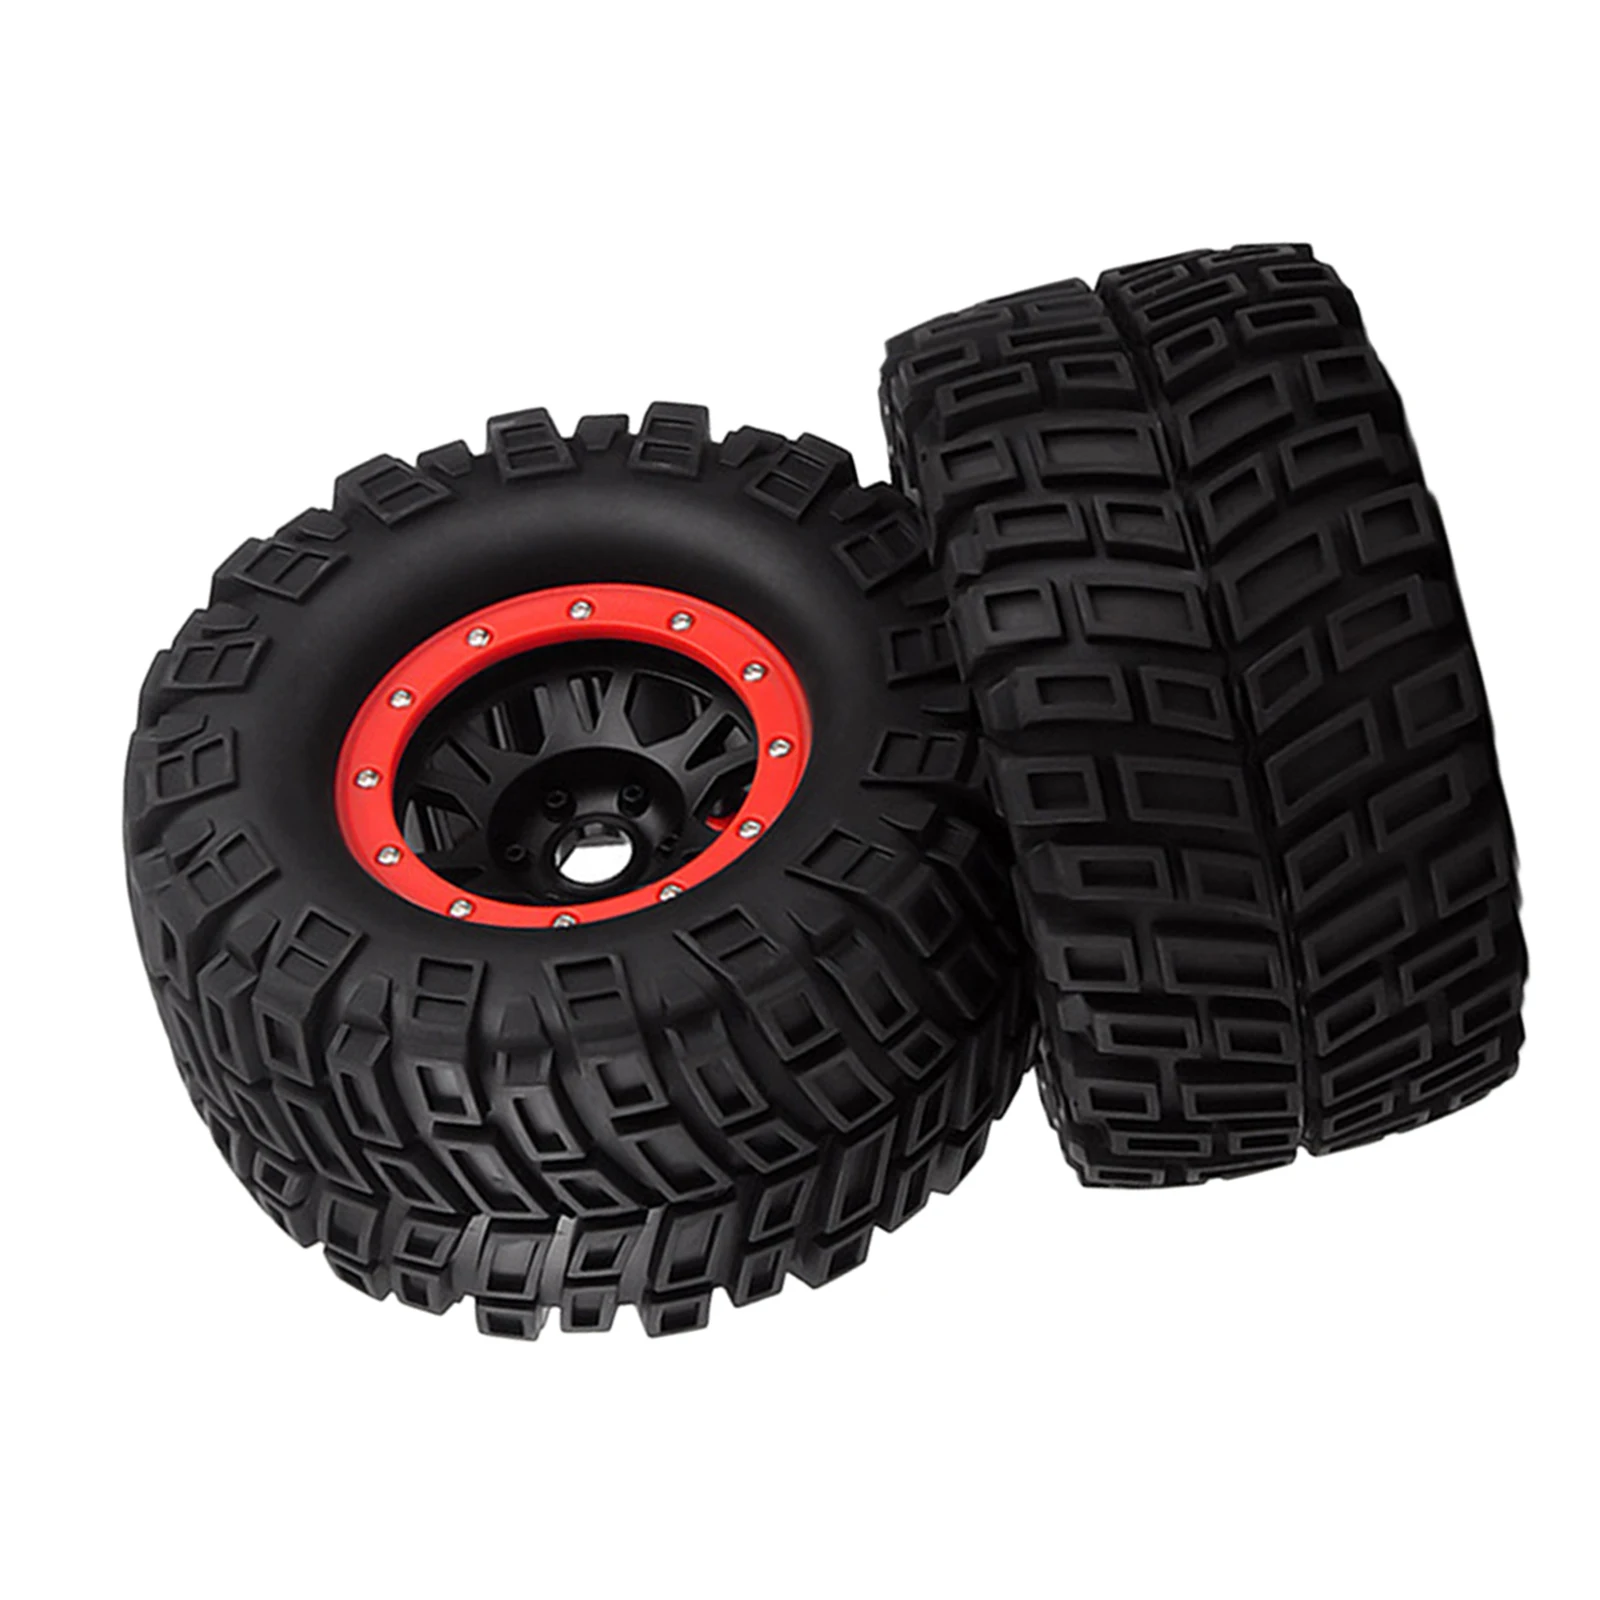 2PCS RC Car Rubber Tire Wheel Rim Set Fit for BUSH G5 E6 G2 Revo HPI Savage Hp 1:8 RC Monster Car Spare Parts Accessory